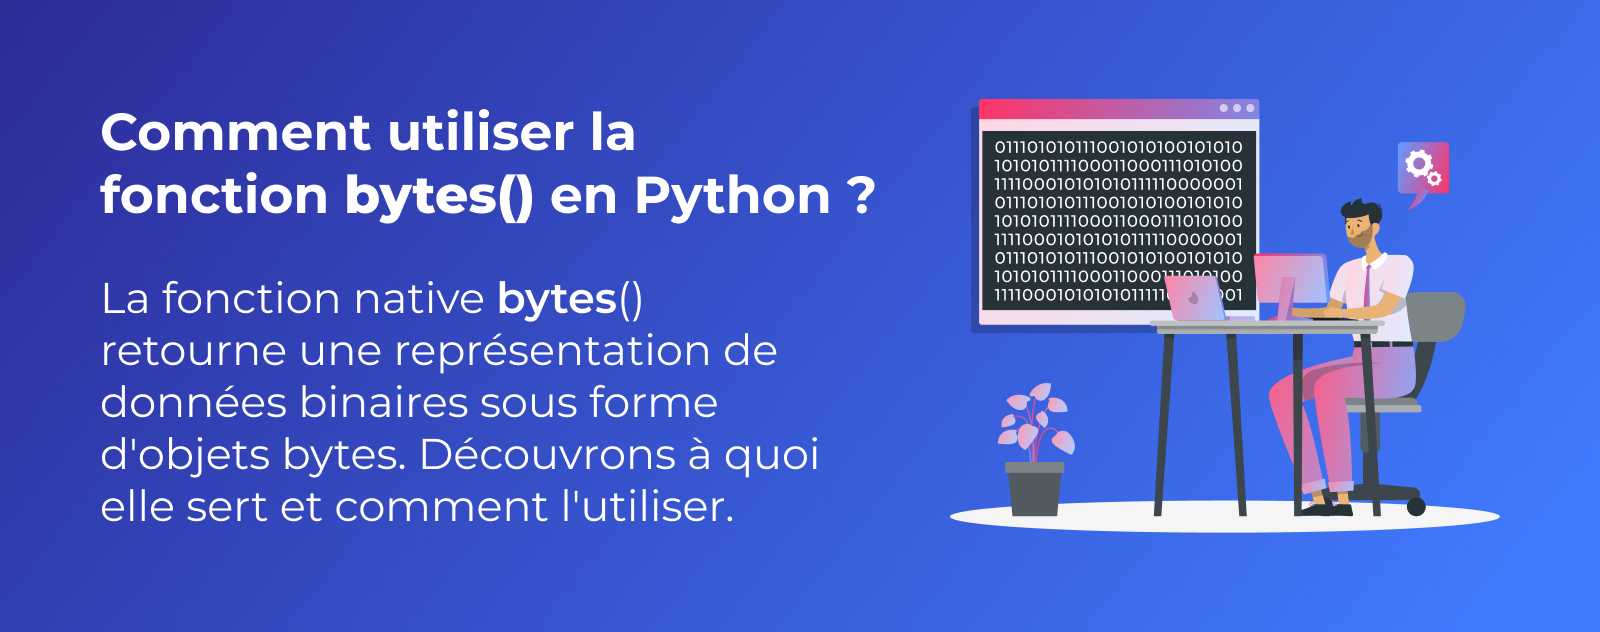 La fonction bytes en Python